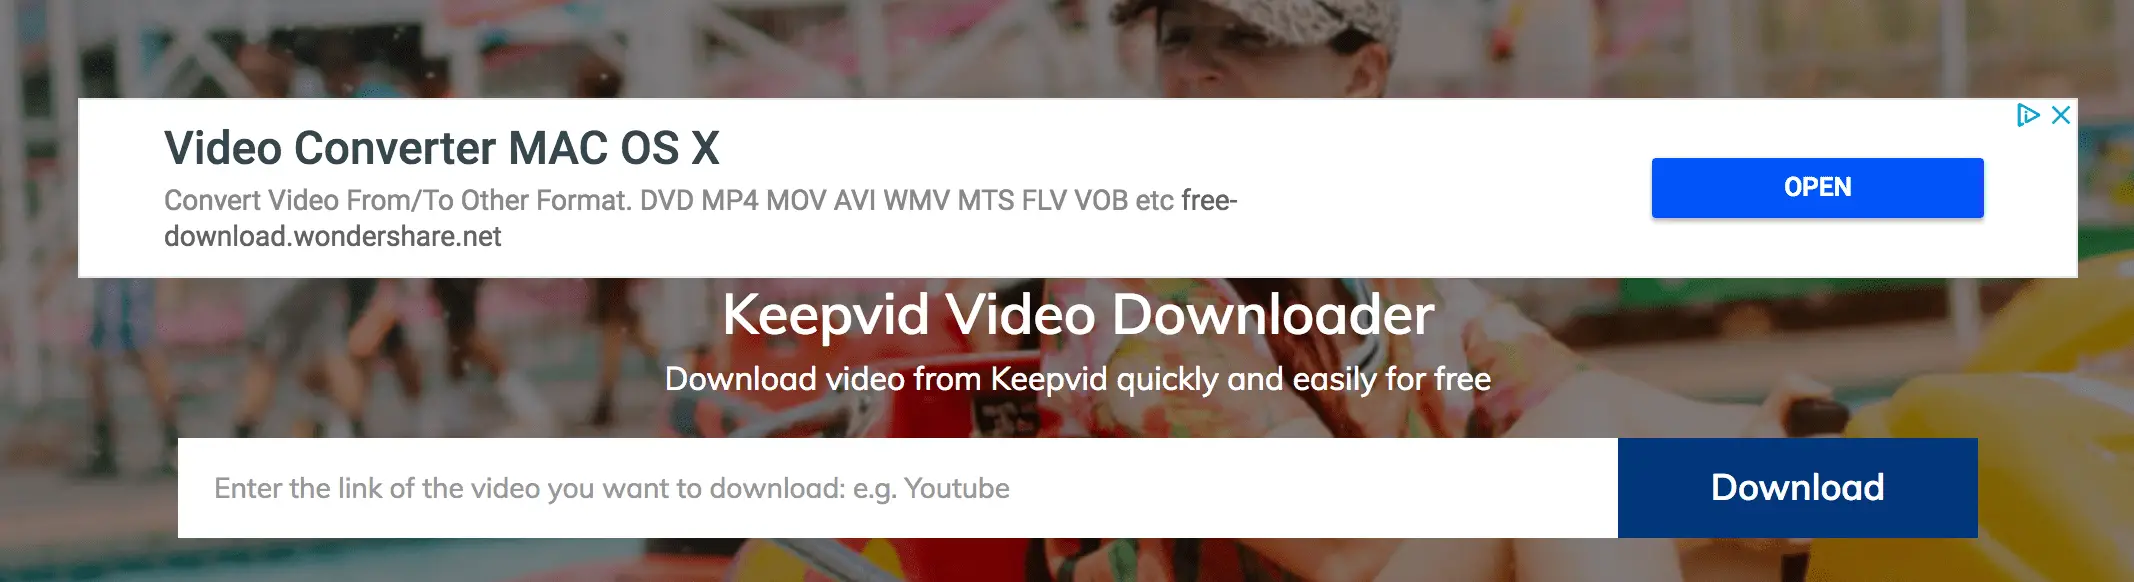 Captura de tela mostrando anúncios no Keepvid